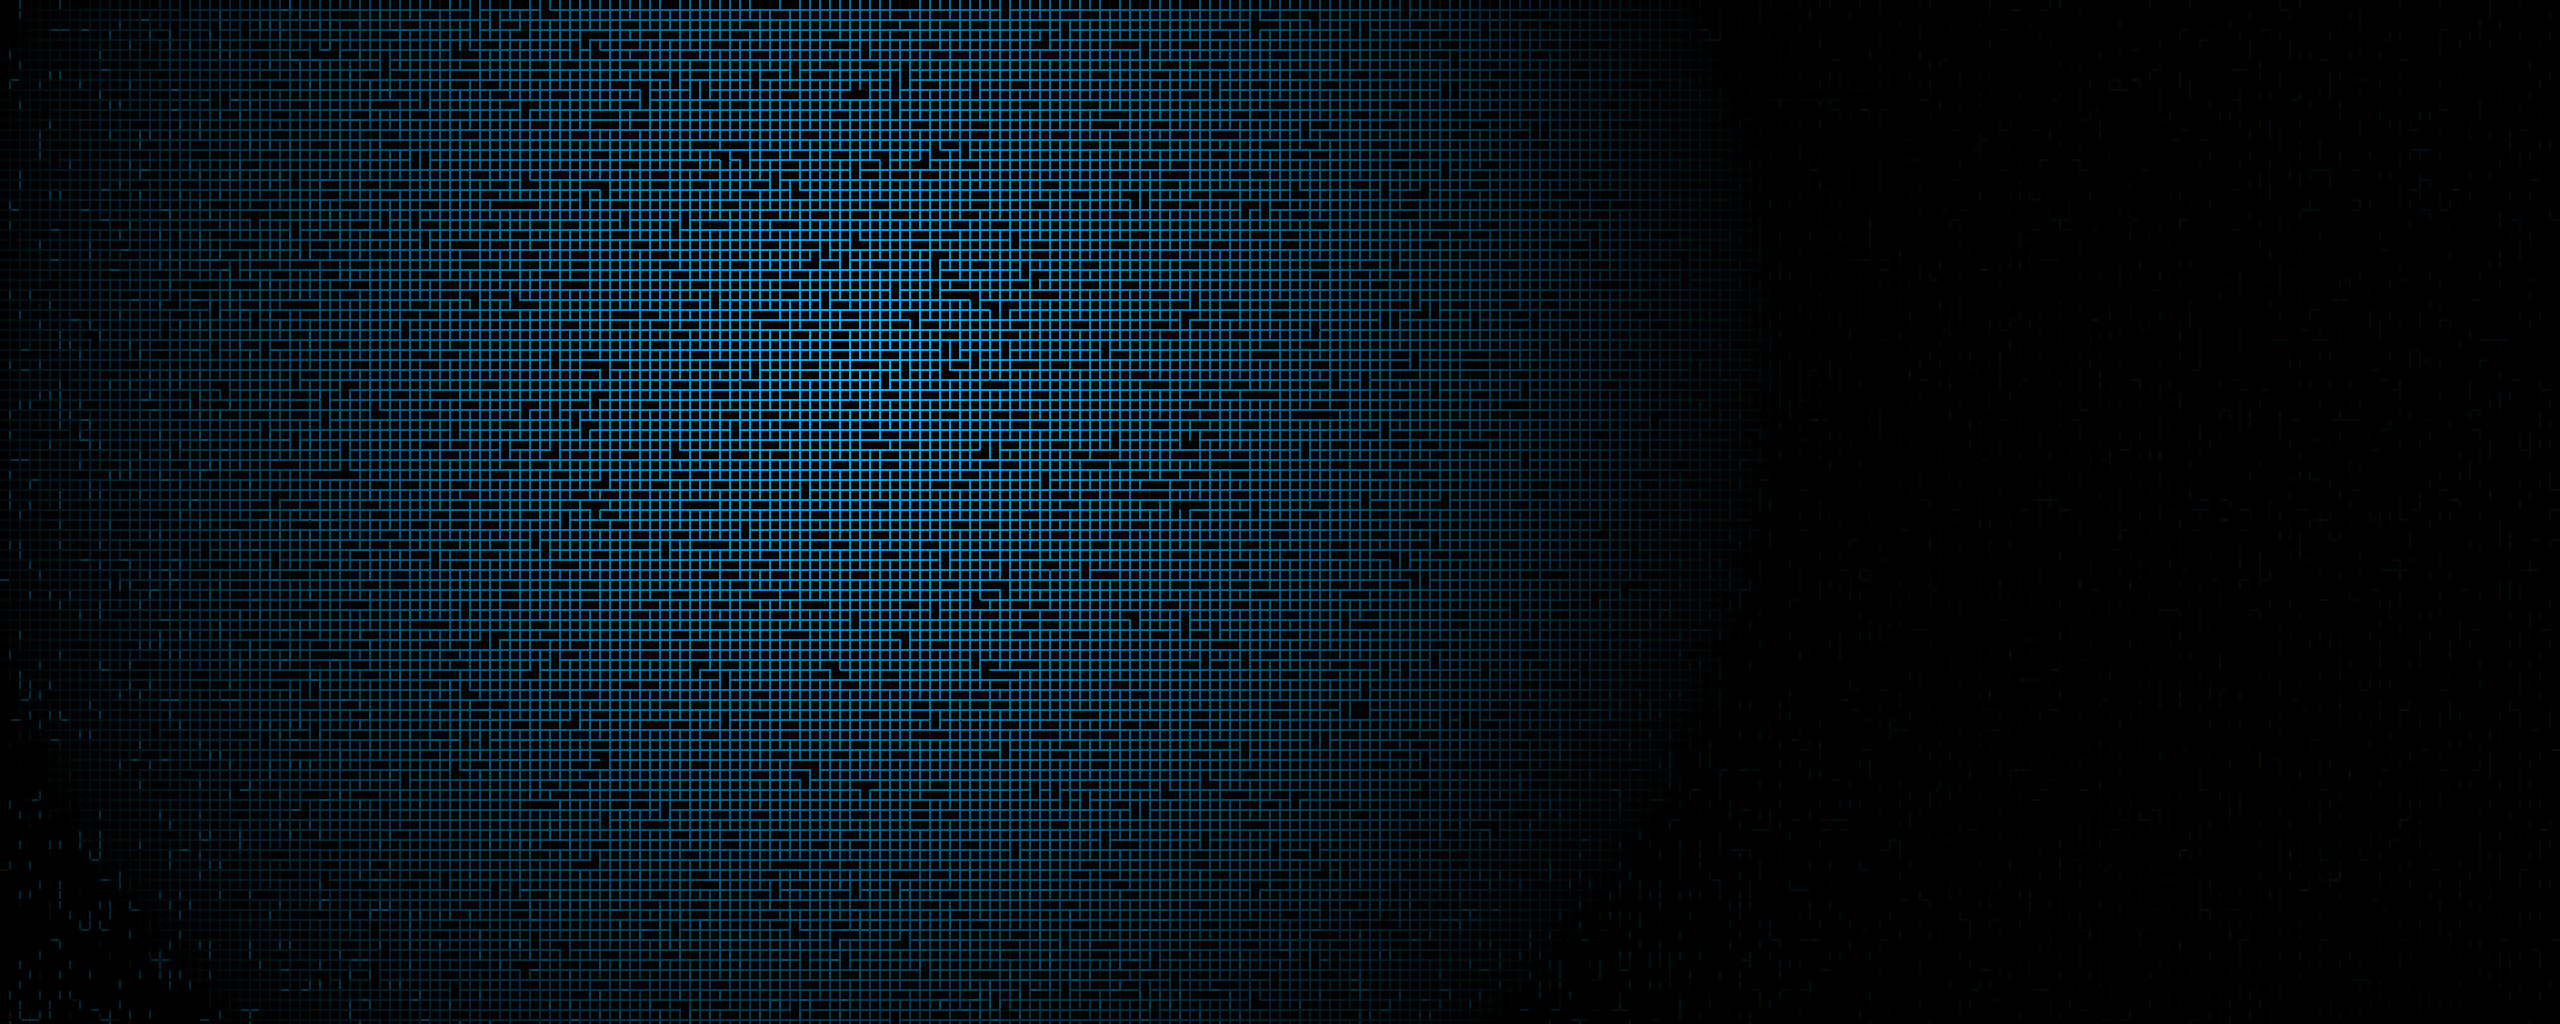 Blue, Black, Blocks, Square large resolution wallpaper background